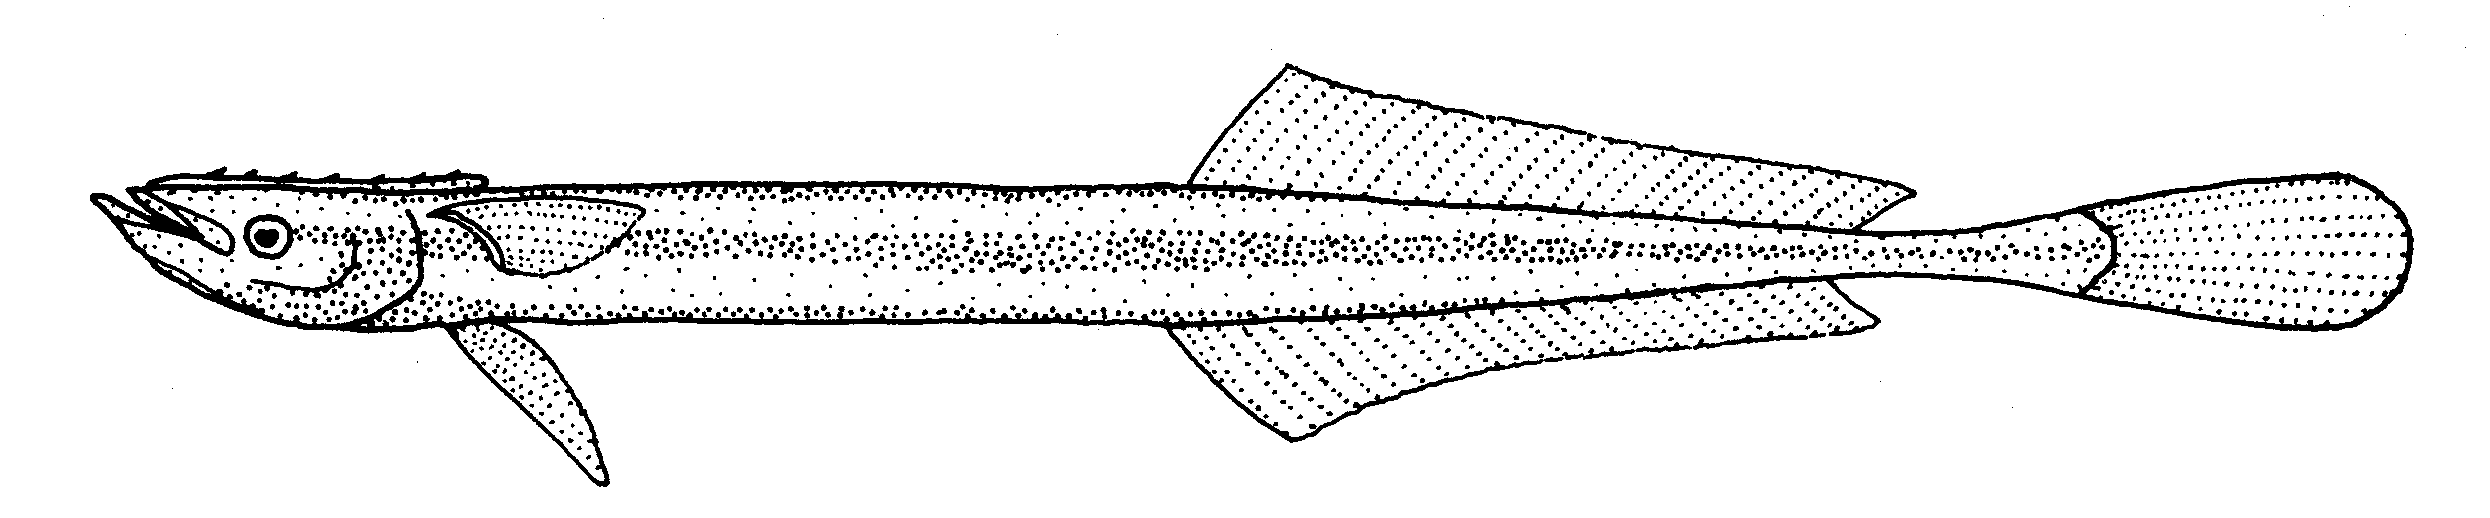  Phtheirichthys lineatus